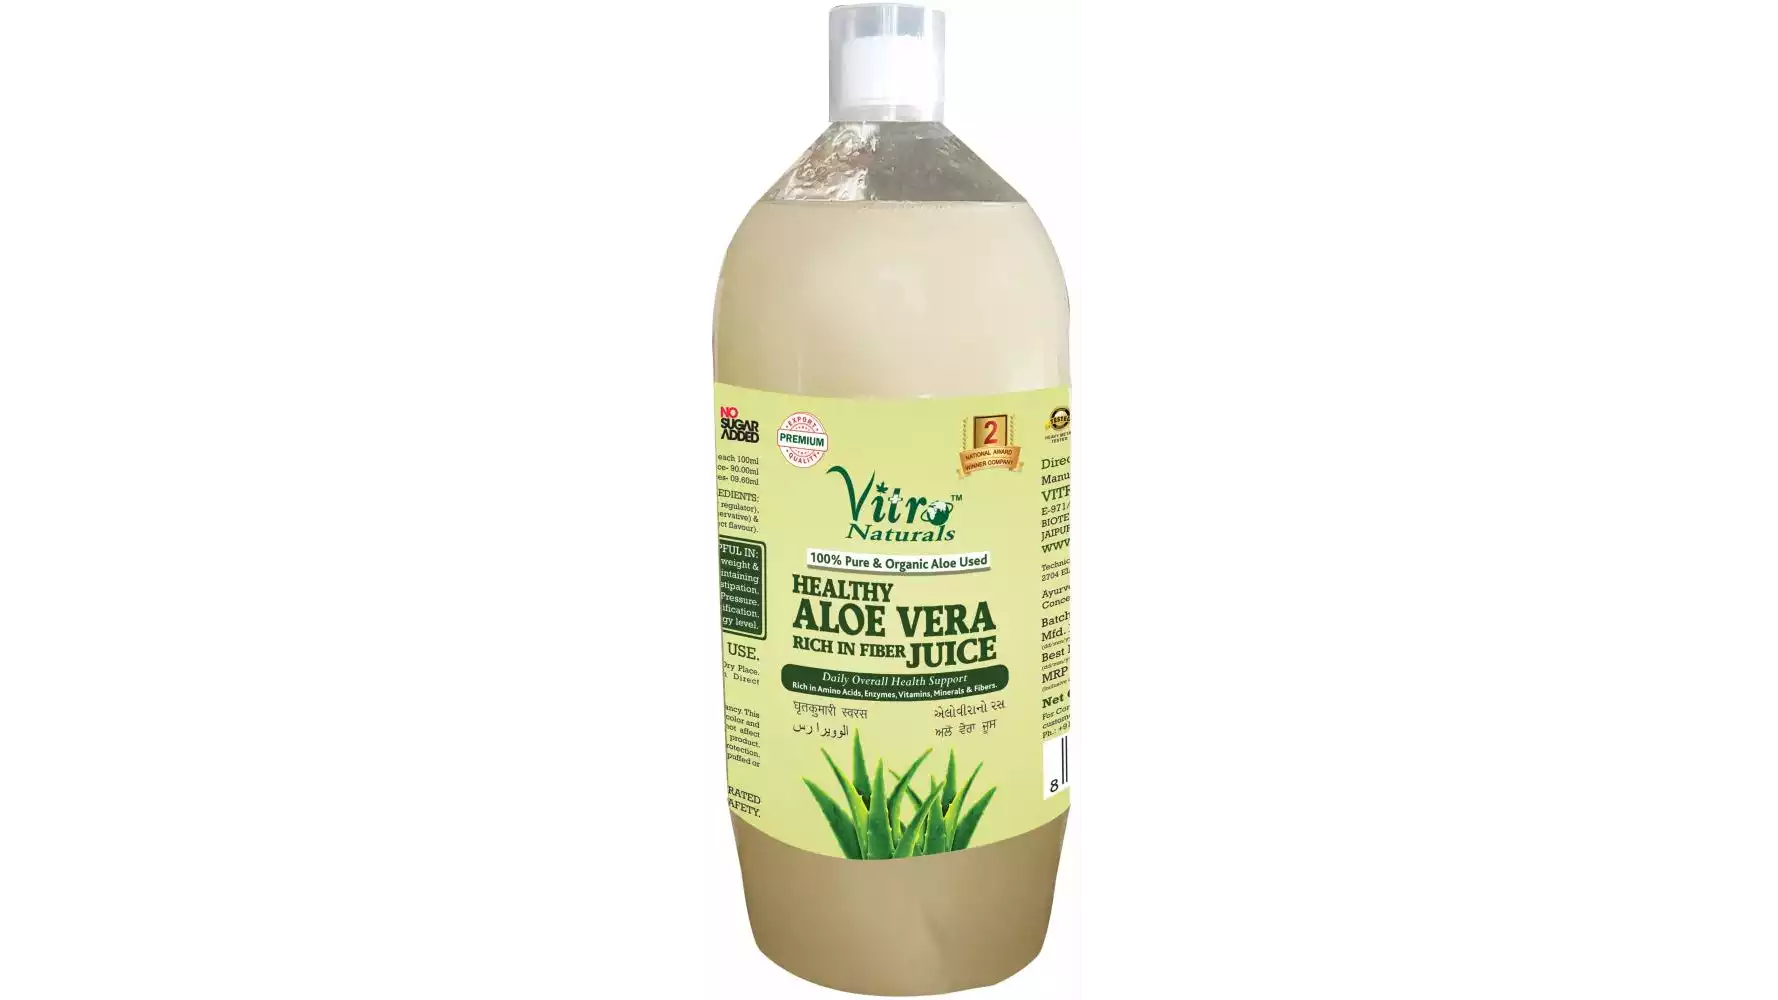 Vitro Naturals Healthy Aloe Vera Juice (1liter)